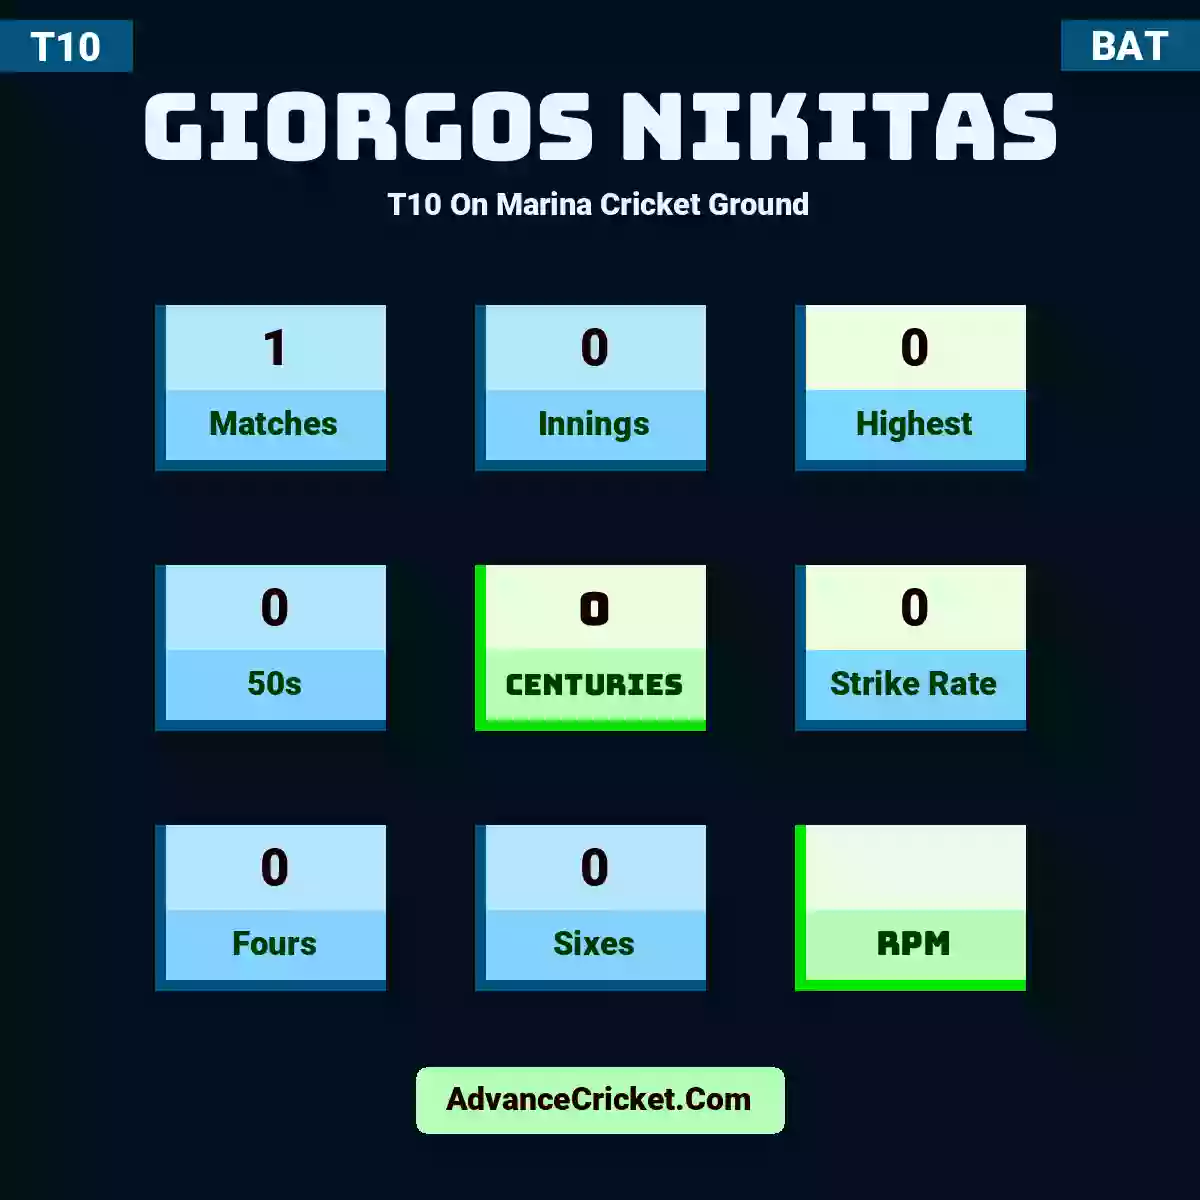 Giorgos Nikitas T10  On Marina Cricket Ground, Giorgos Nikitas played 1 matches, scored 0 runs as highest, 0 half-centuries, and 0 centuries, with a strike rate of 0. G.Nikitas hit 0 fours and 0 sixes.